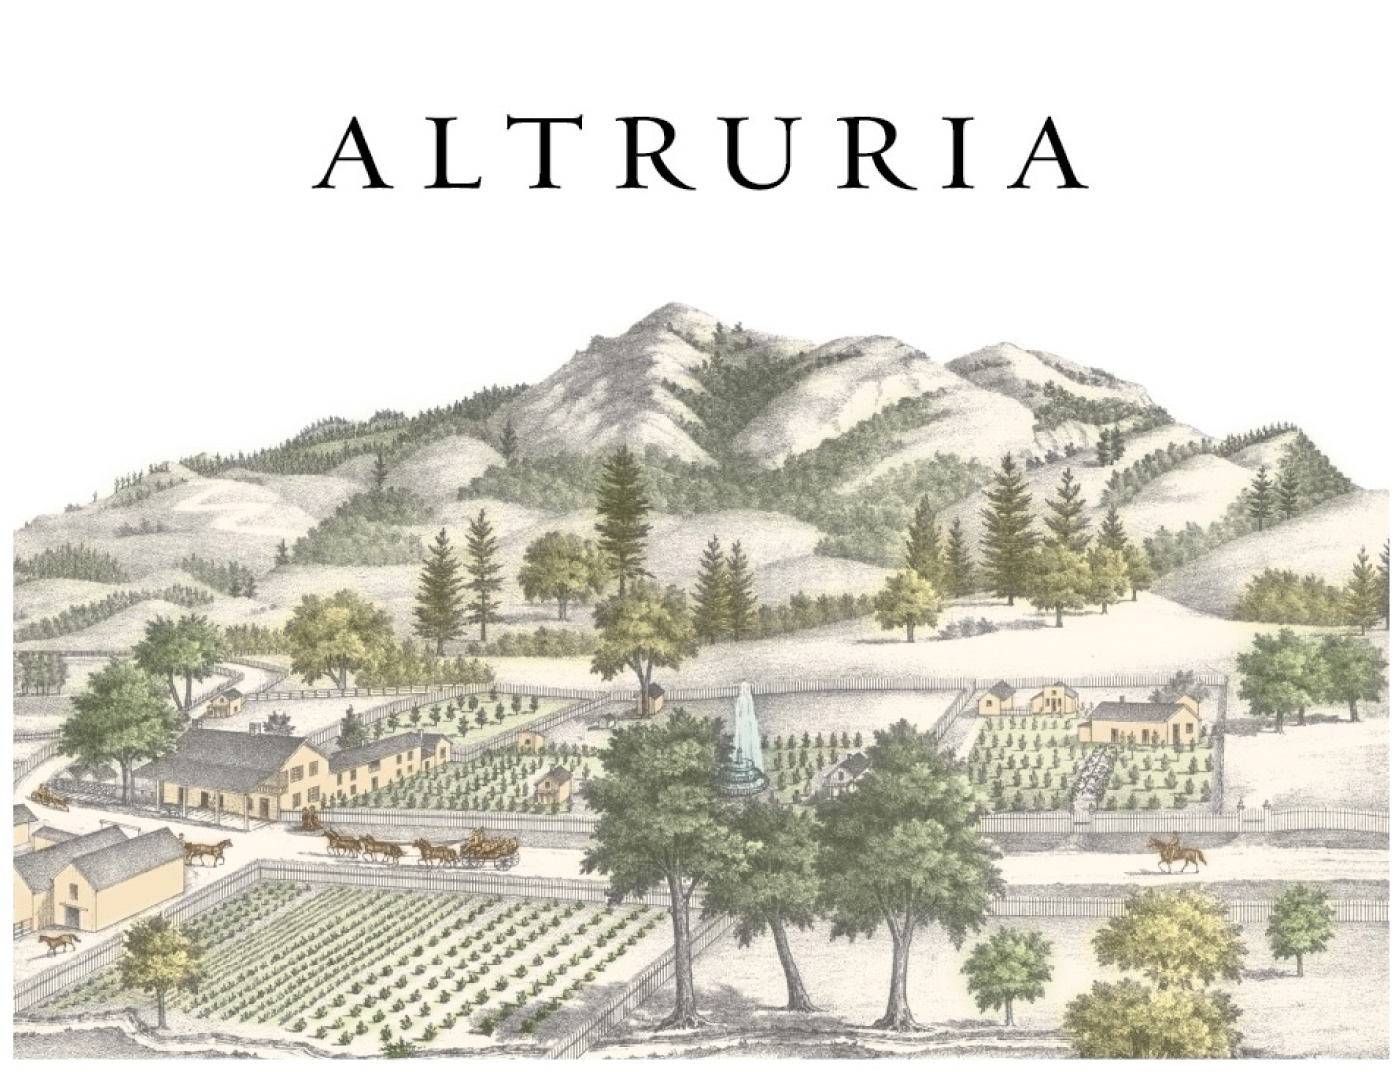 Altruria - Cabernet Sauvignon label